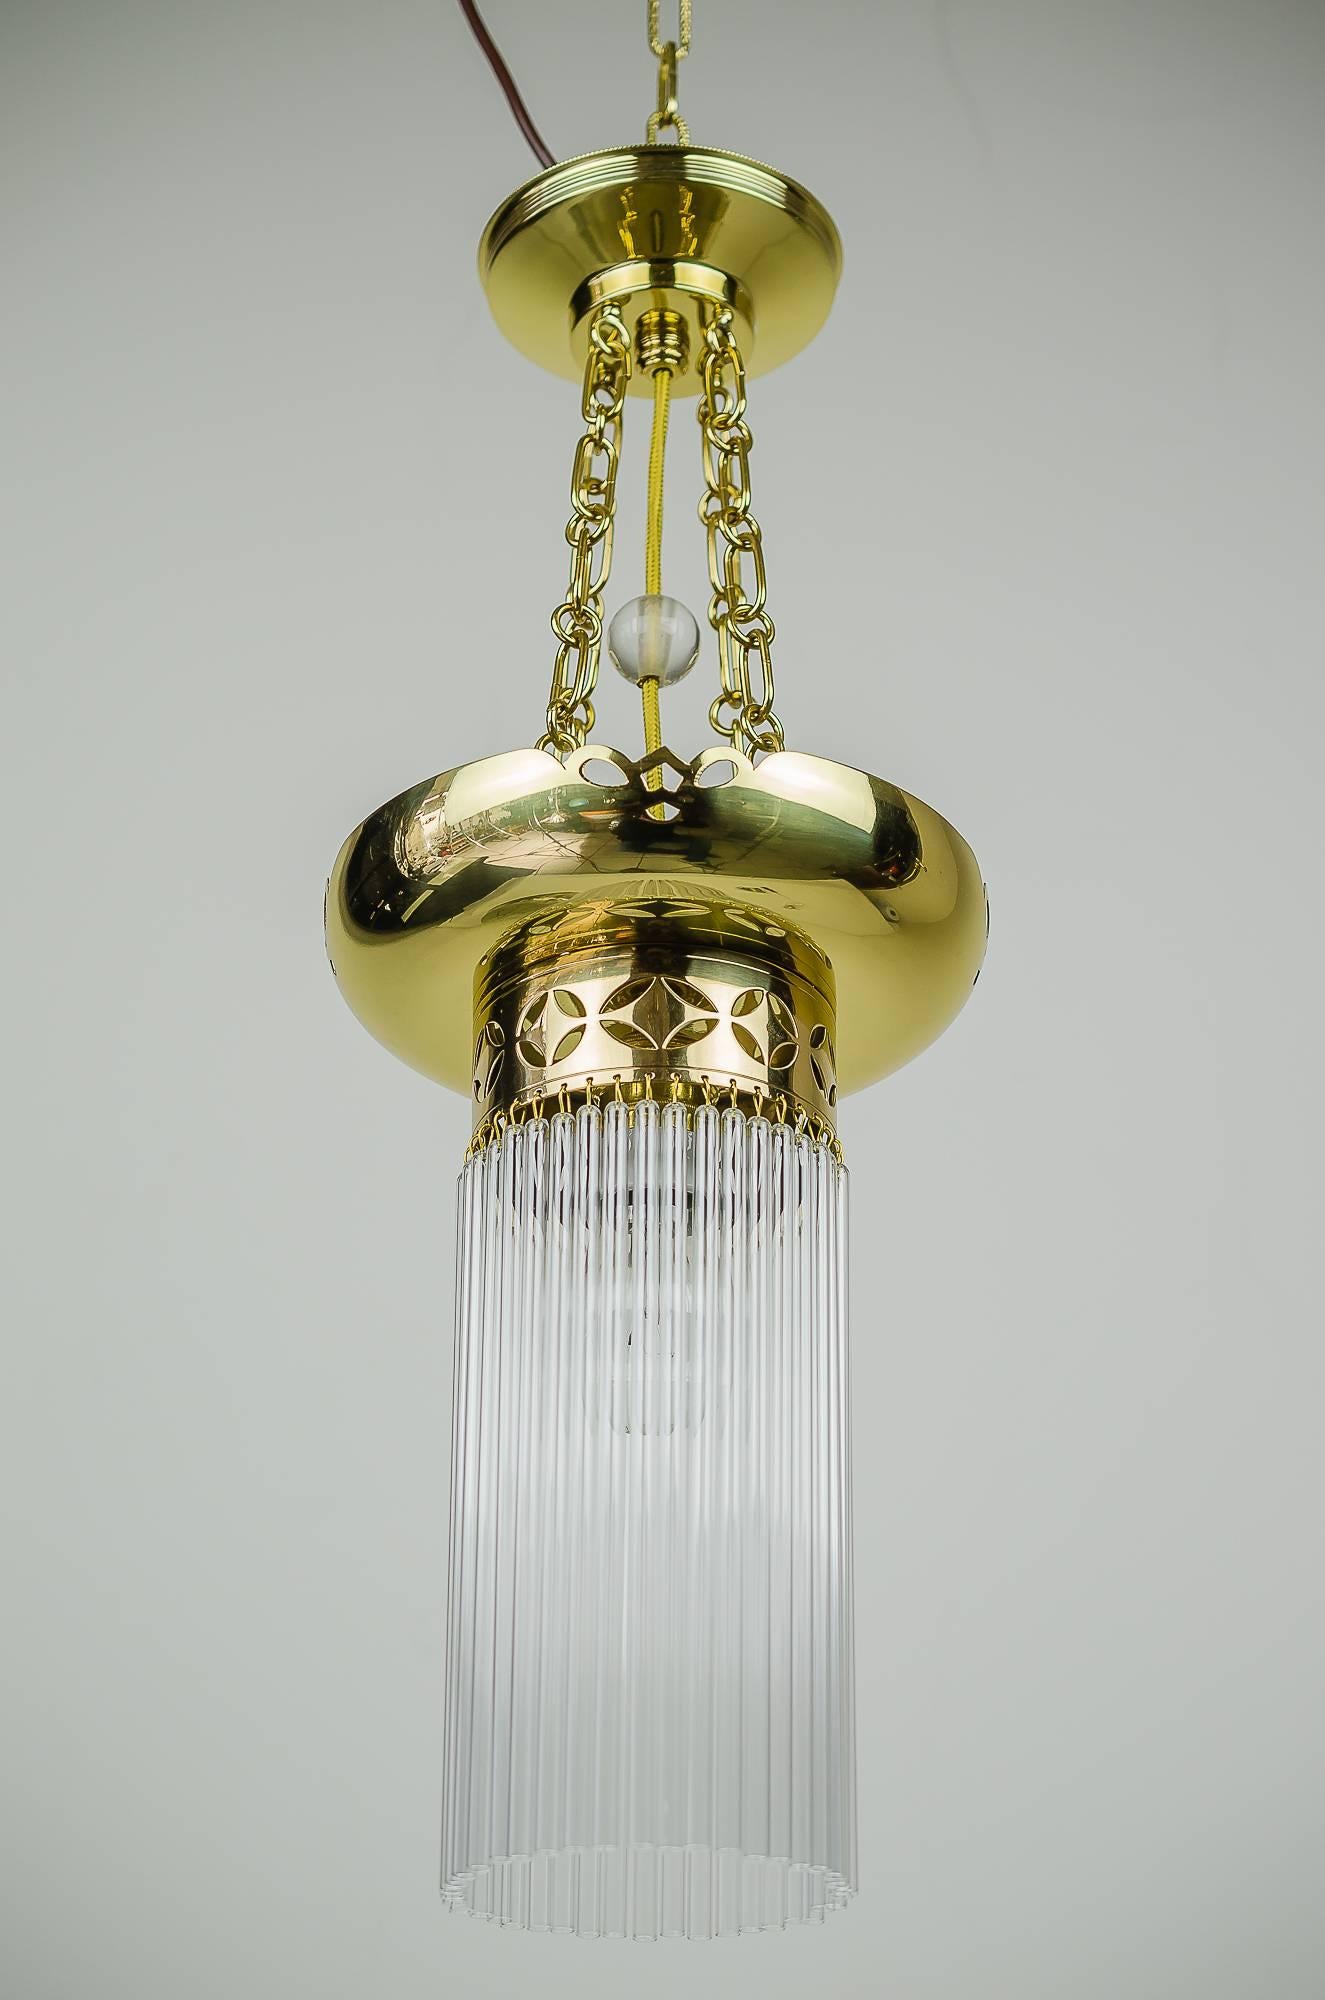 Jugendstil pendant, circa 1910
Polished and stove enamelled
Glass sticks replaced (new).
 